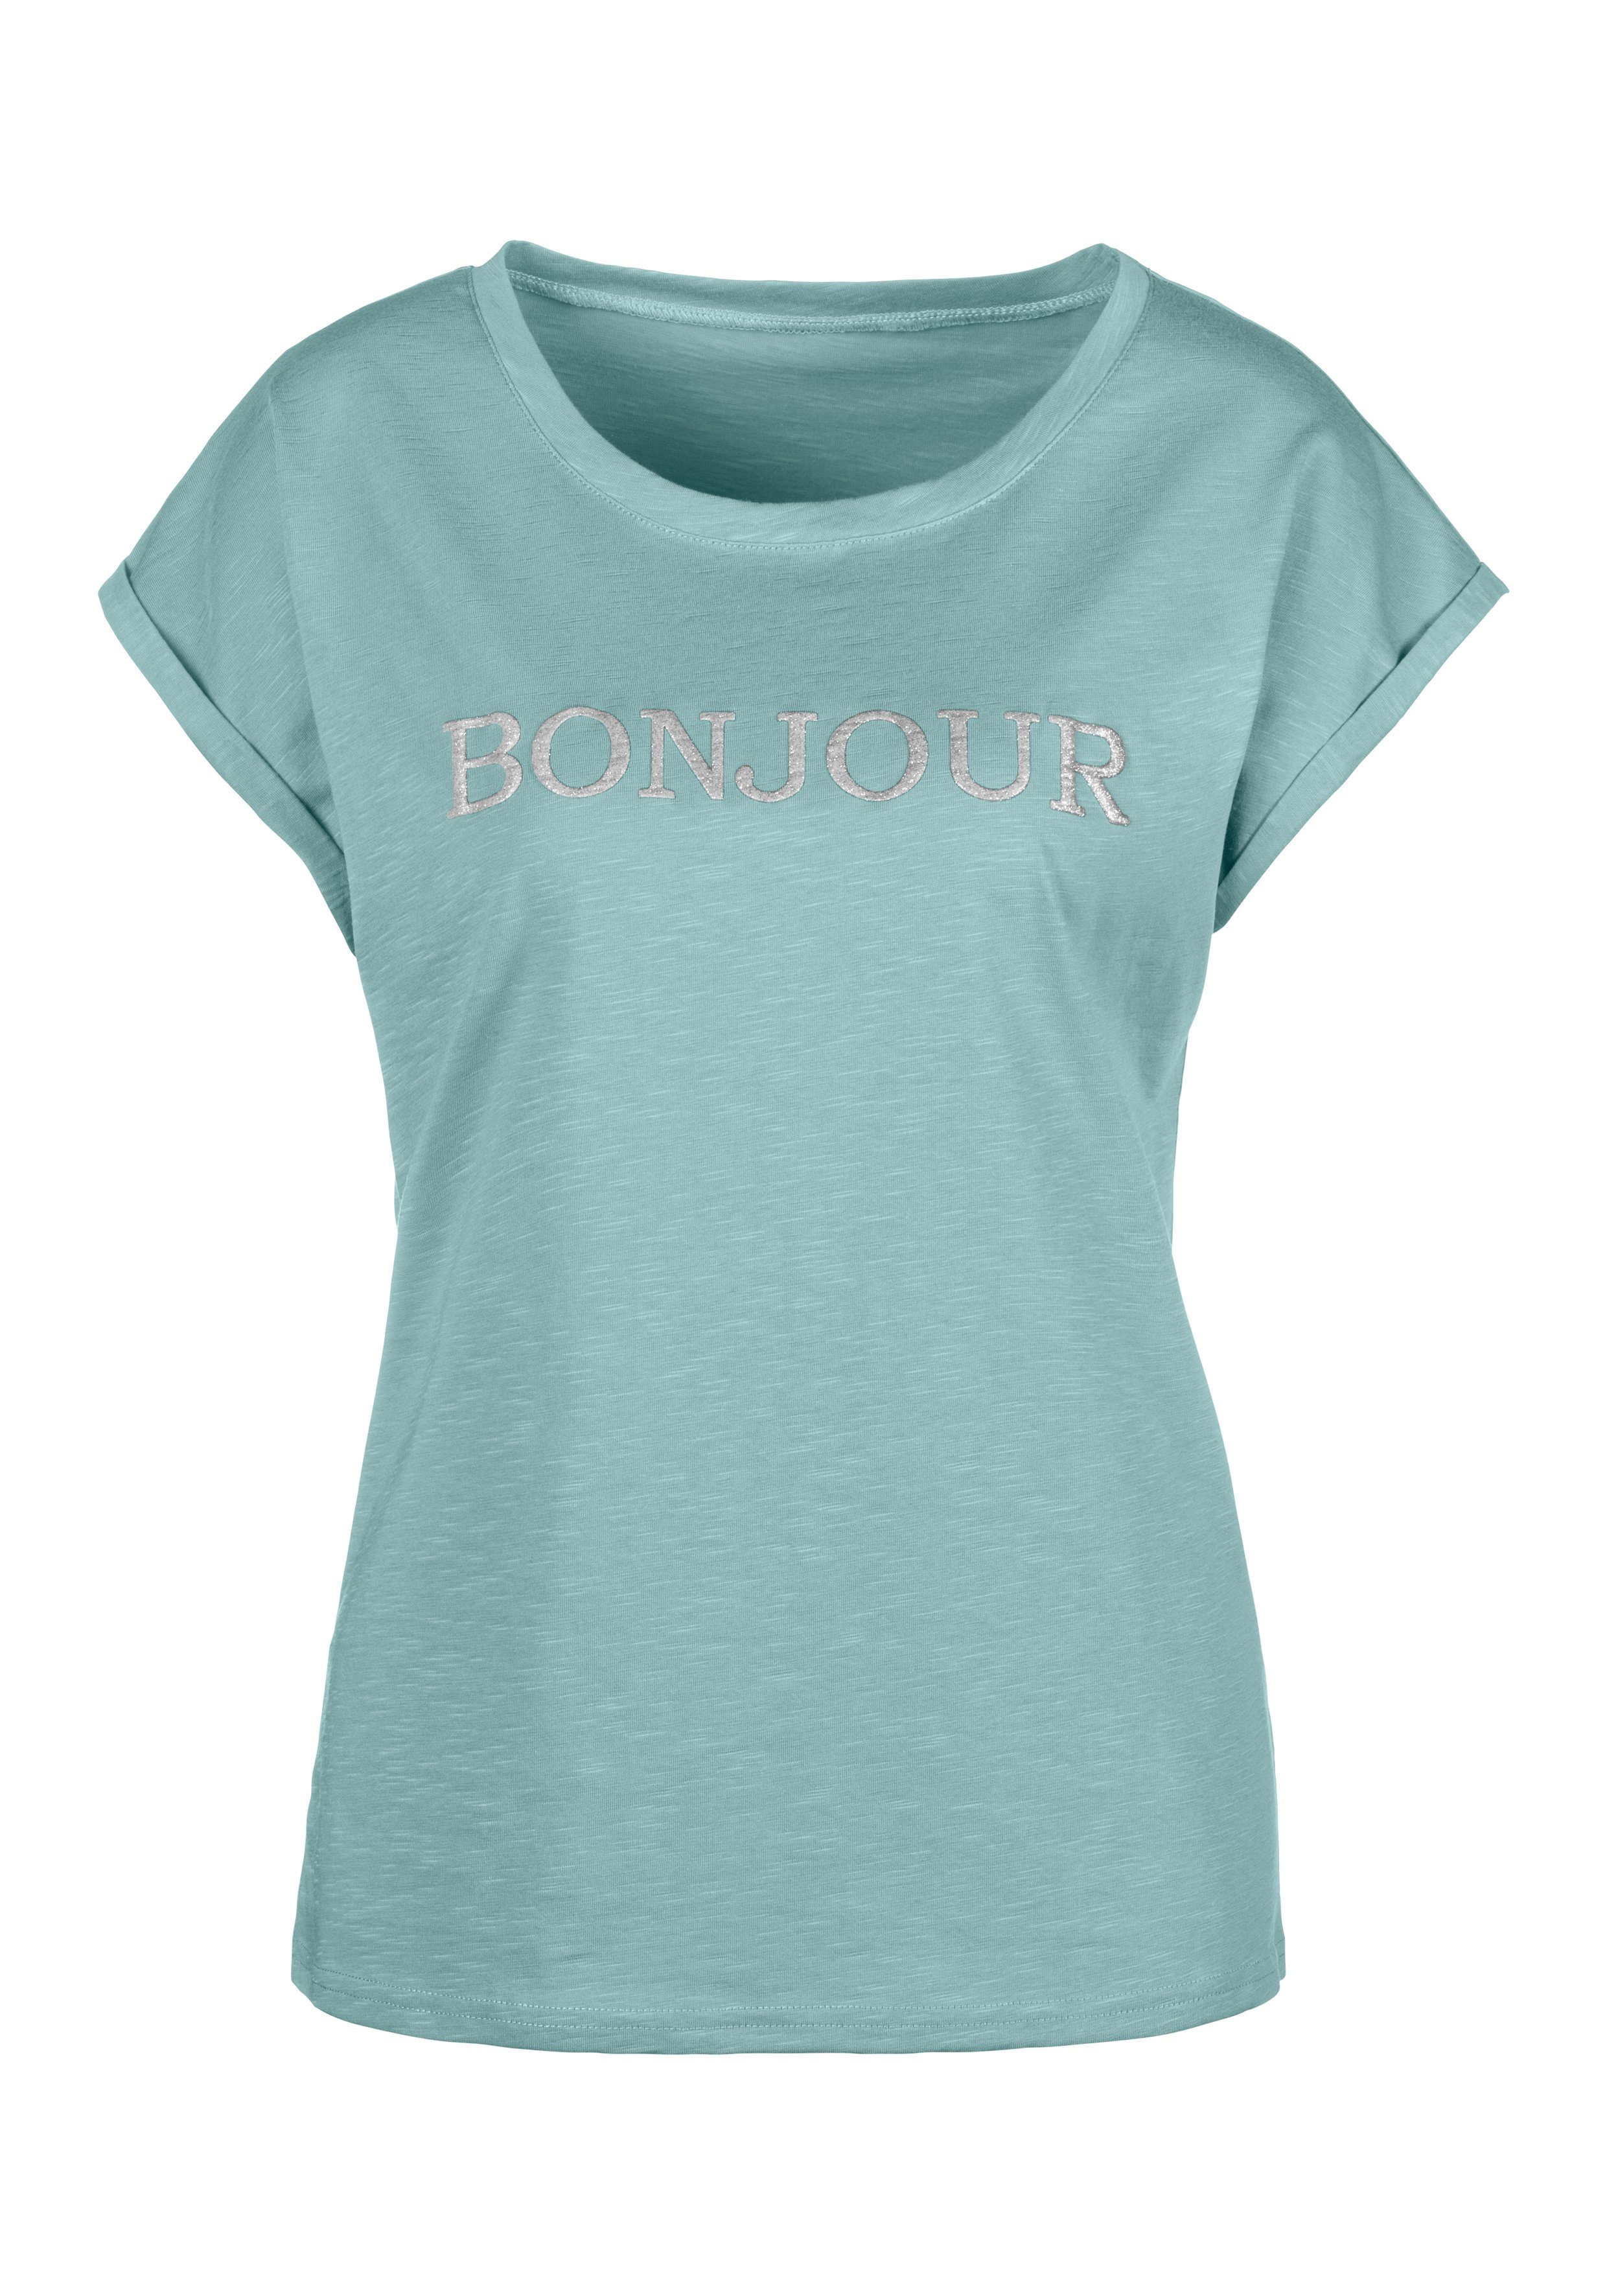 T-Shirt mit "Bonjour" mint modischem Frontdruck Vivance